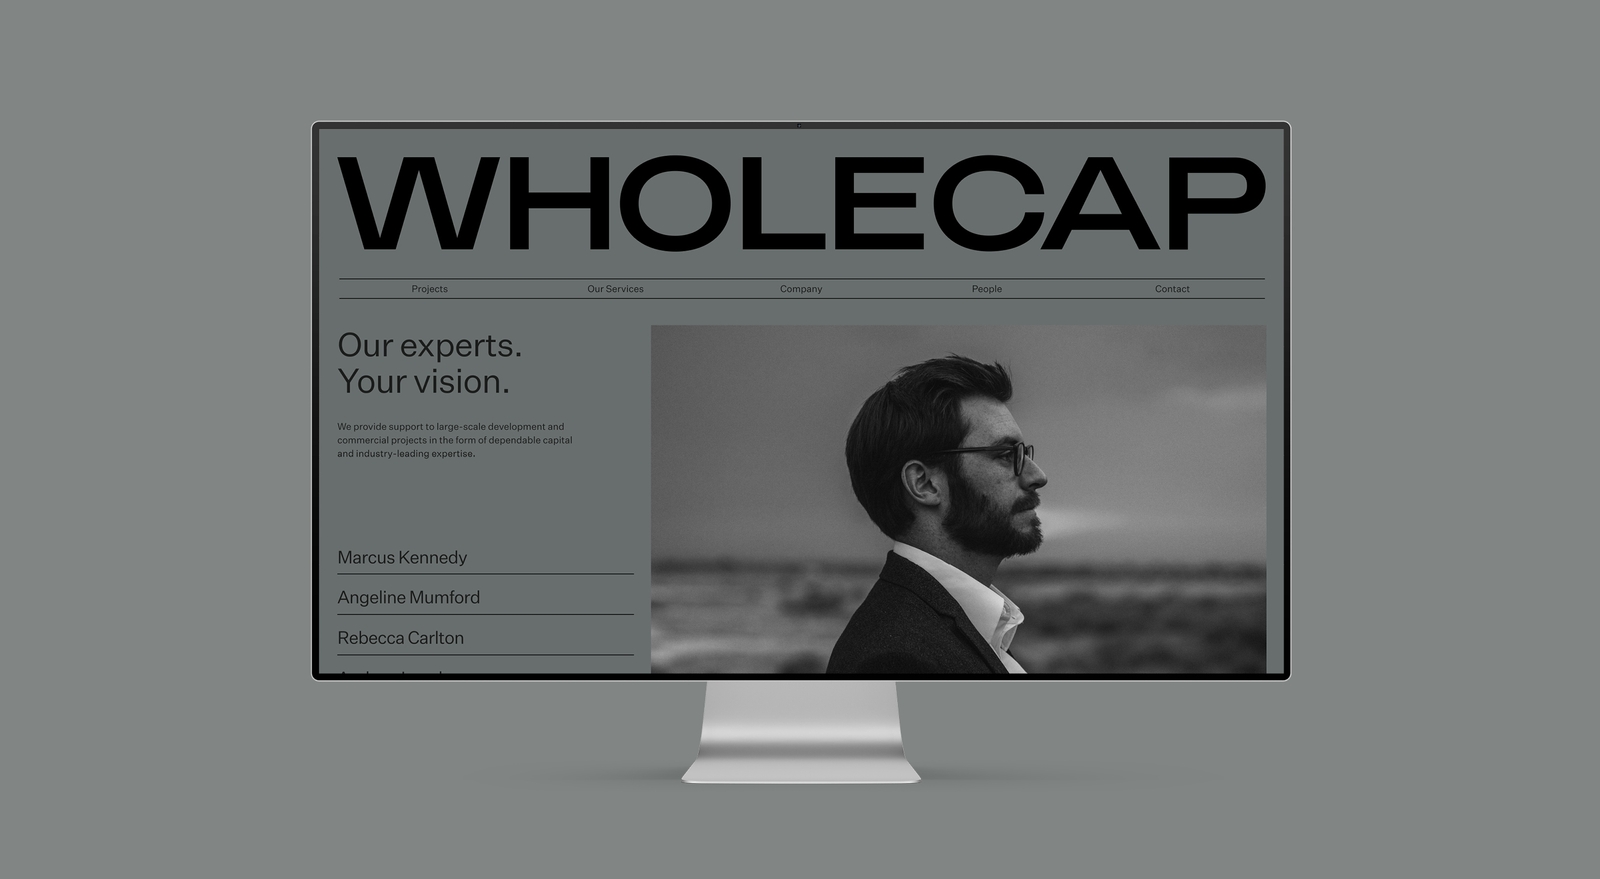 Wholecap - Brand and Website Design - Financial Capital Funding UX design Desktop mockup | Atollon - a design company